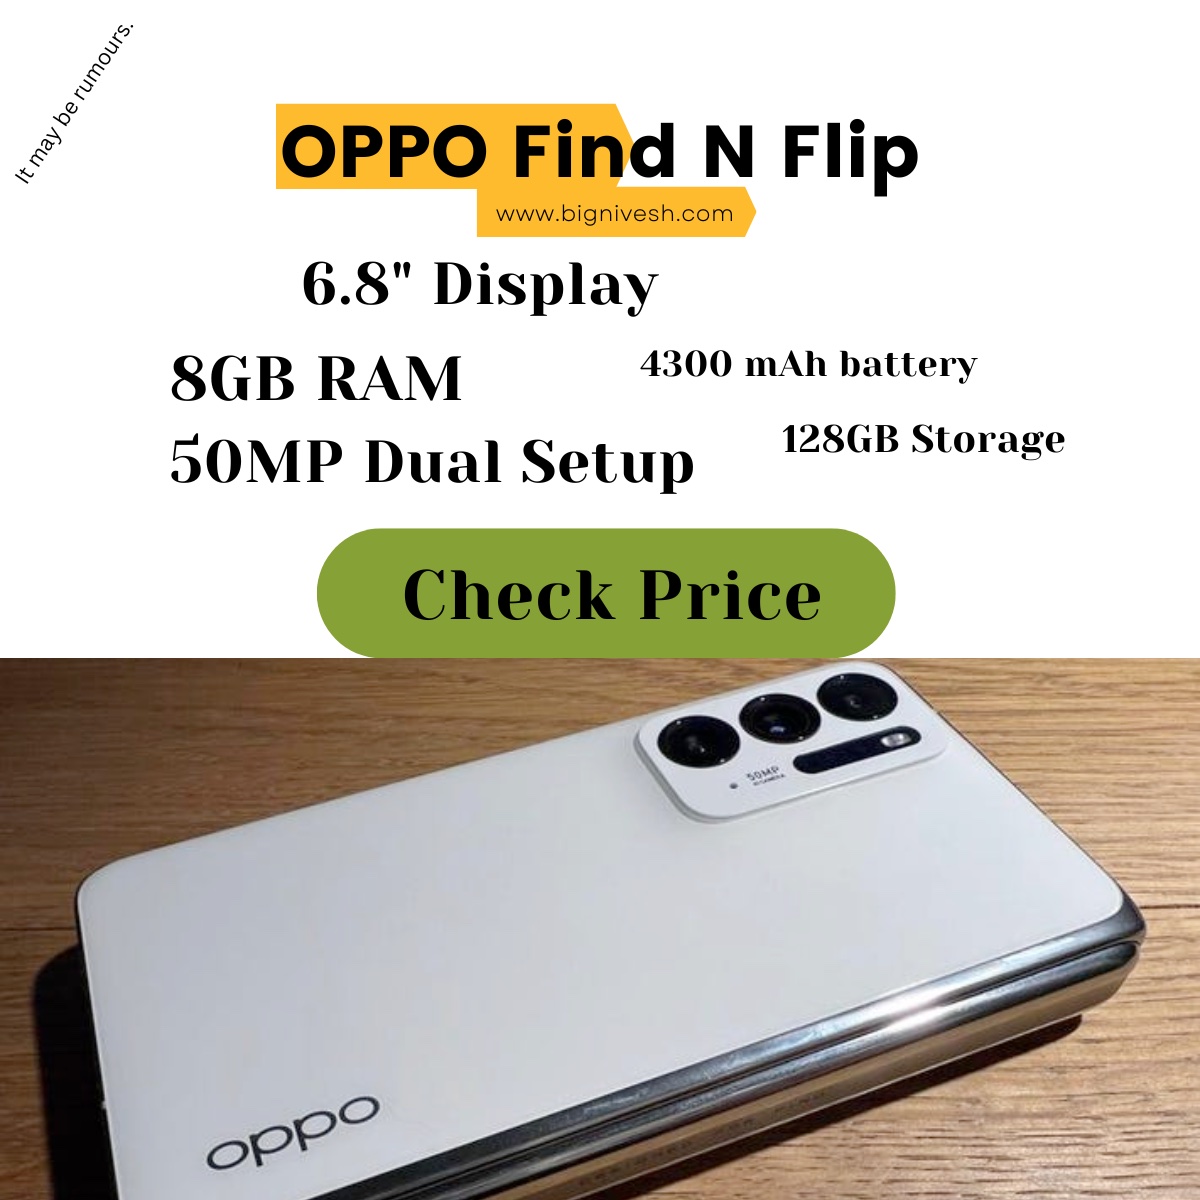 Oppo Find N Flip Phone Price in India